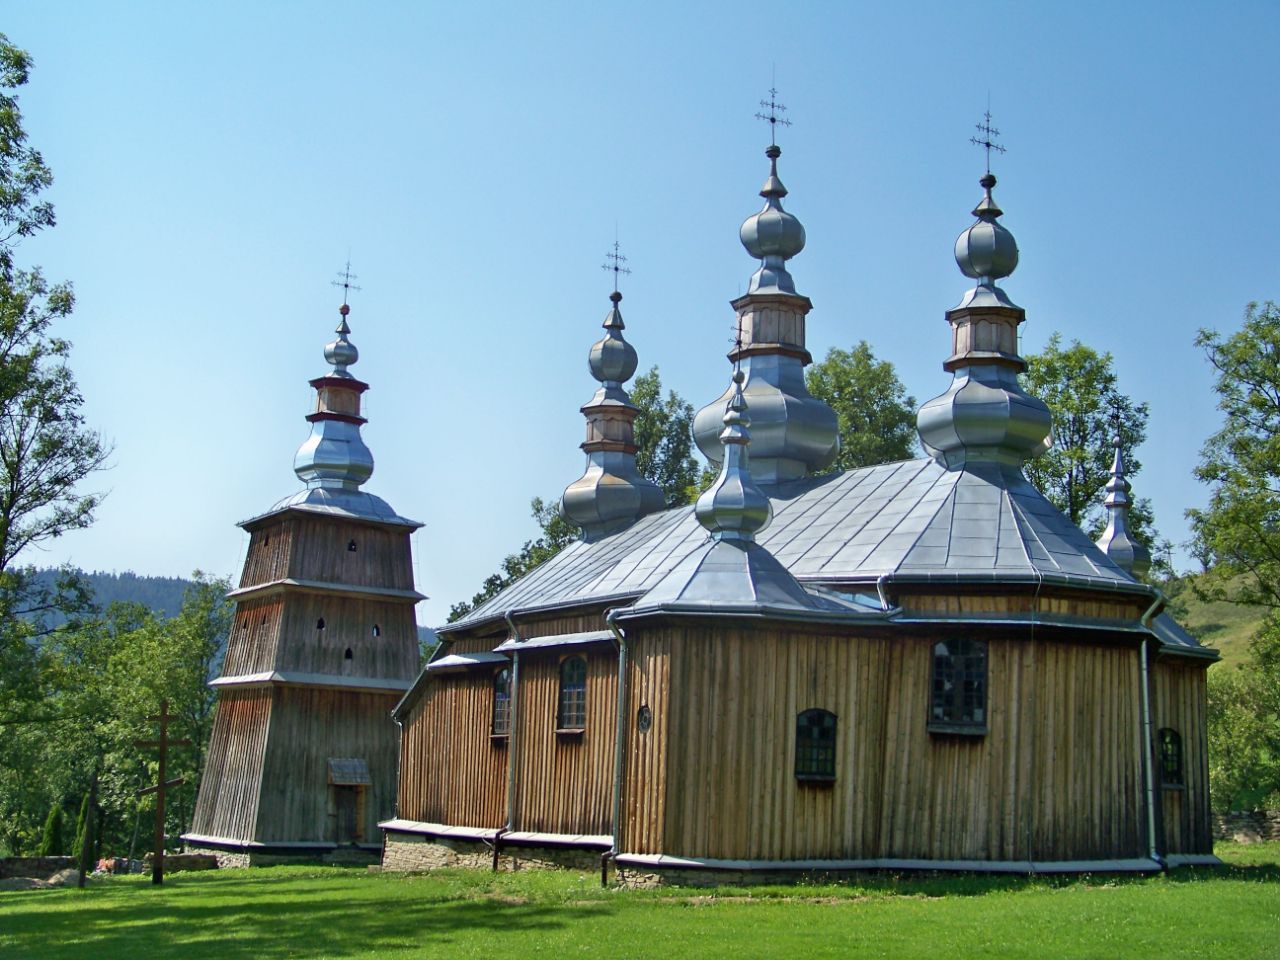 Церковь Михаила Архангела Тужаньск / St. Michael Archangels Church, Turzańsk